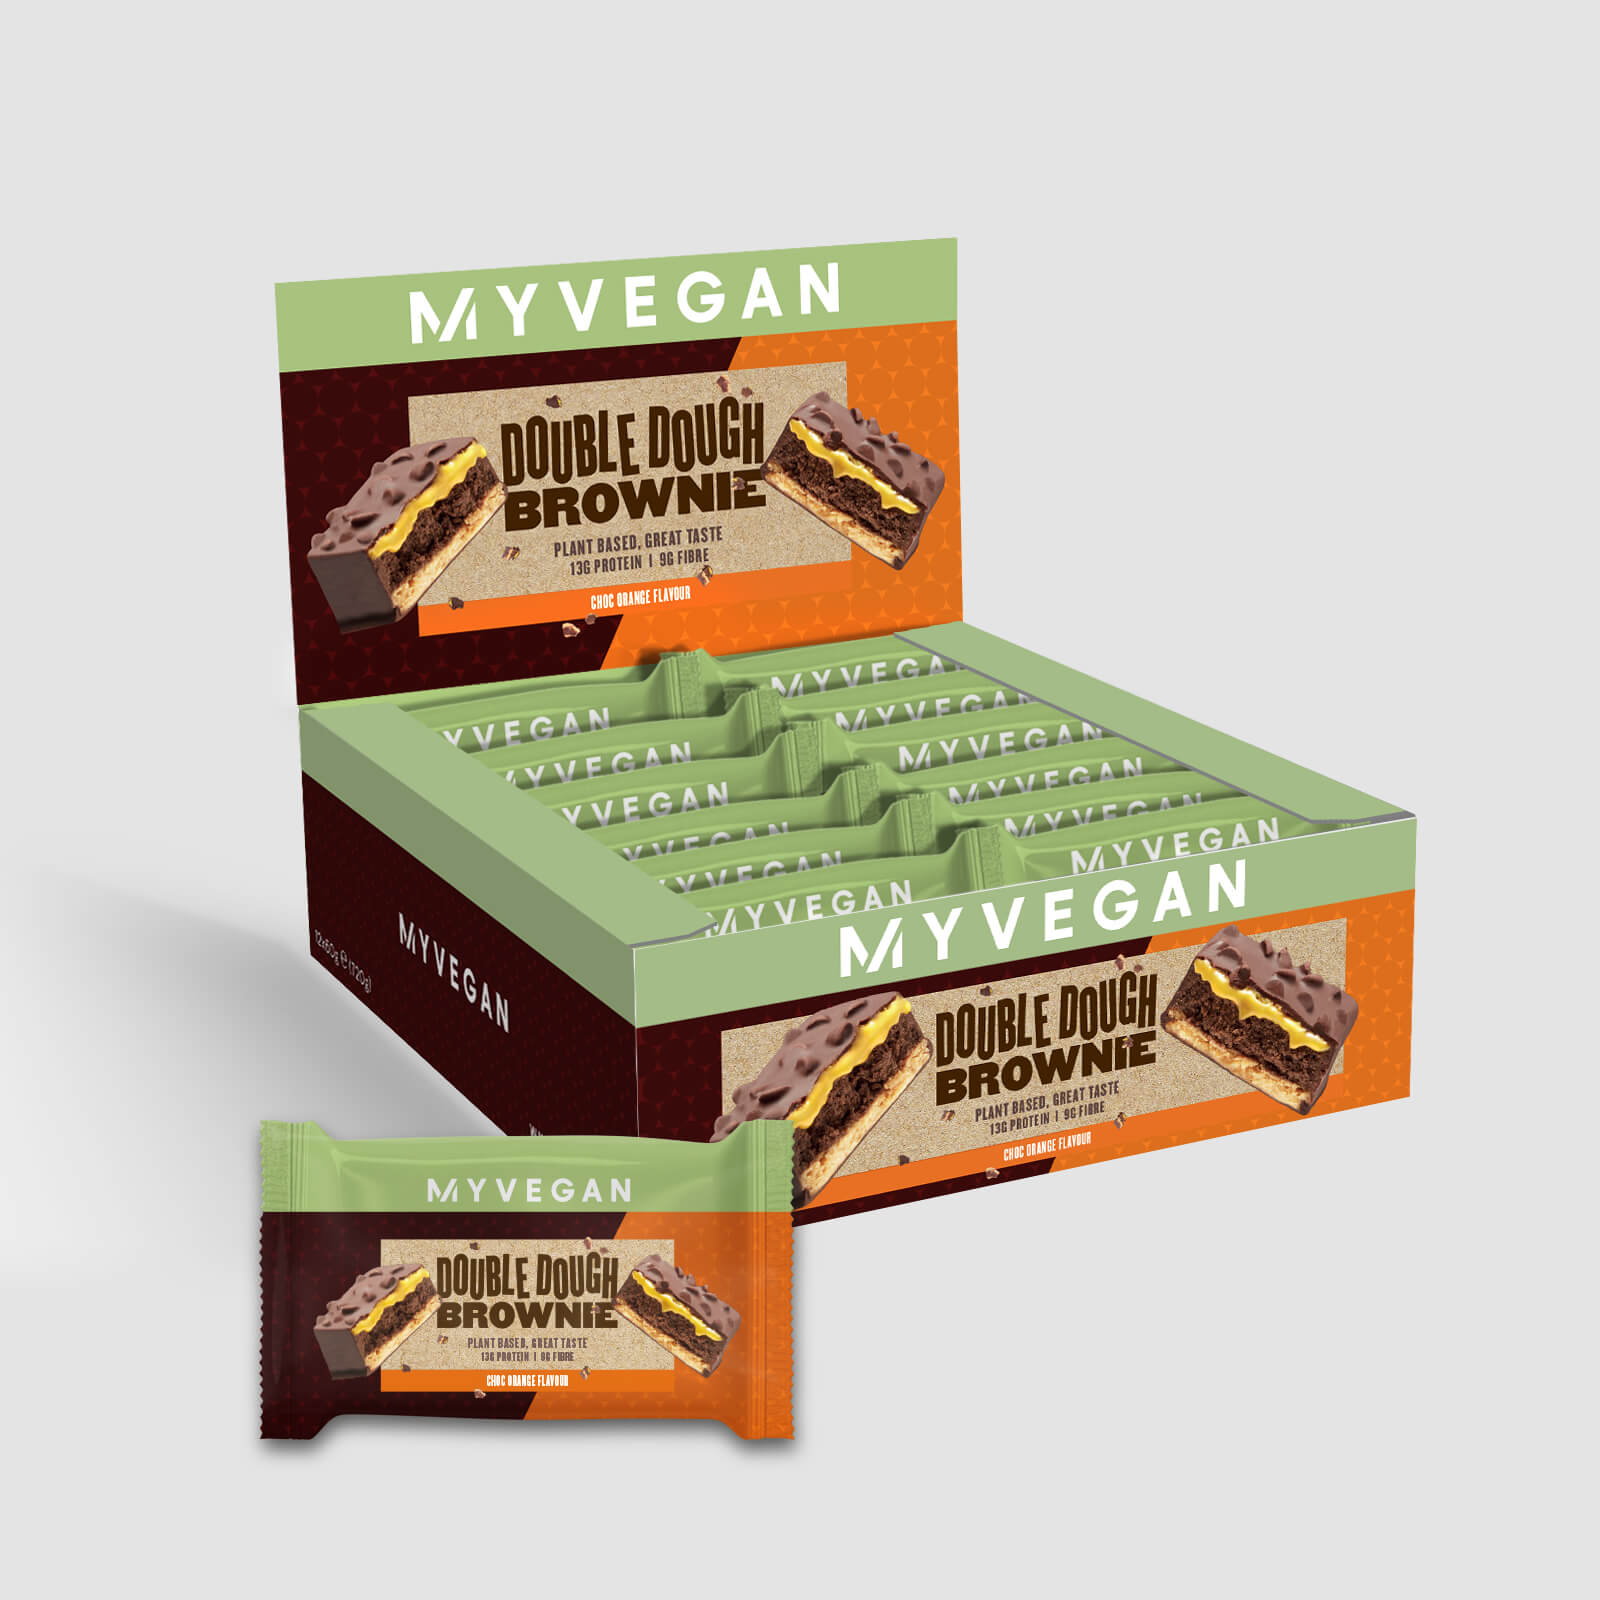 Myvegan Vegan Double Dough Brownie - Chocolate Orange